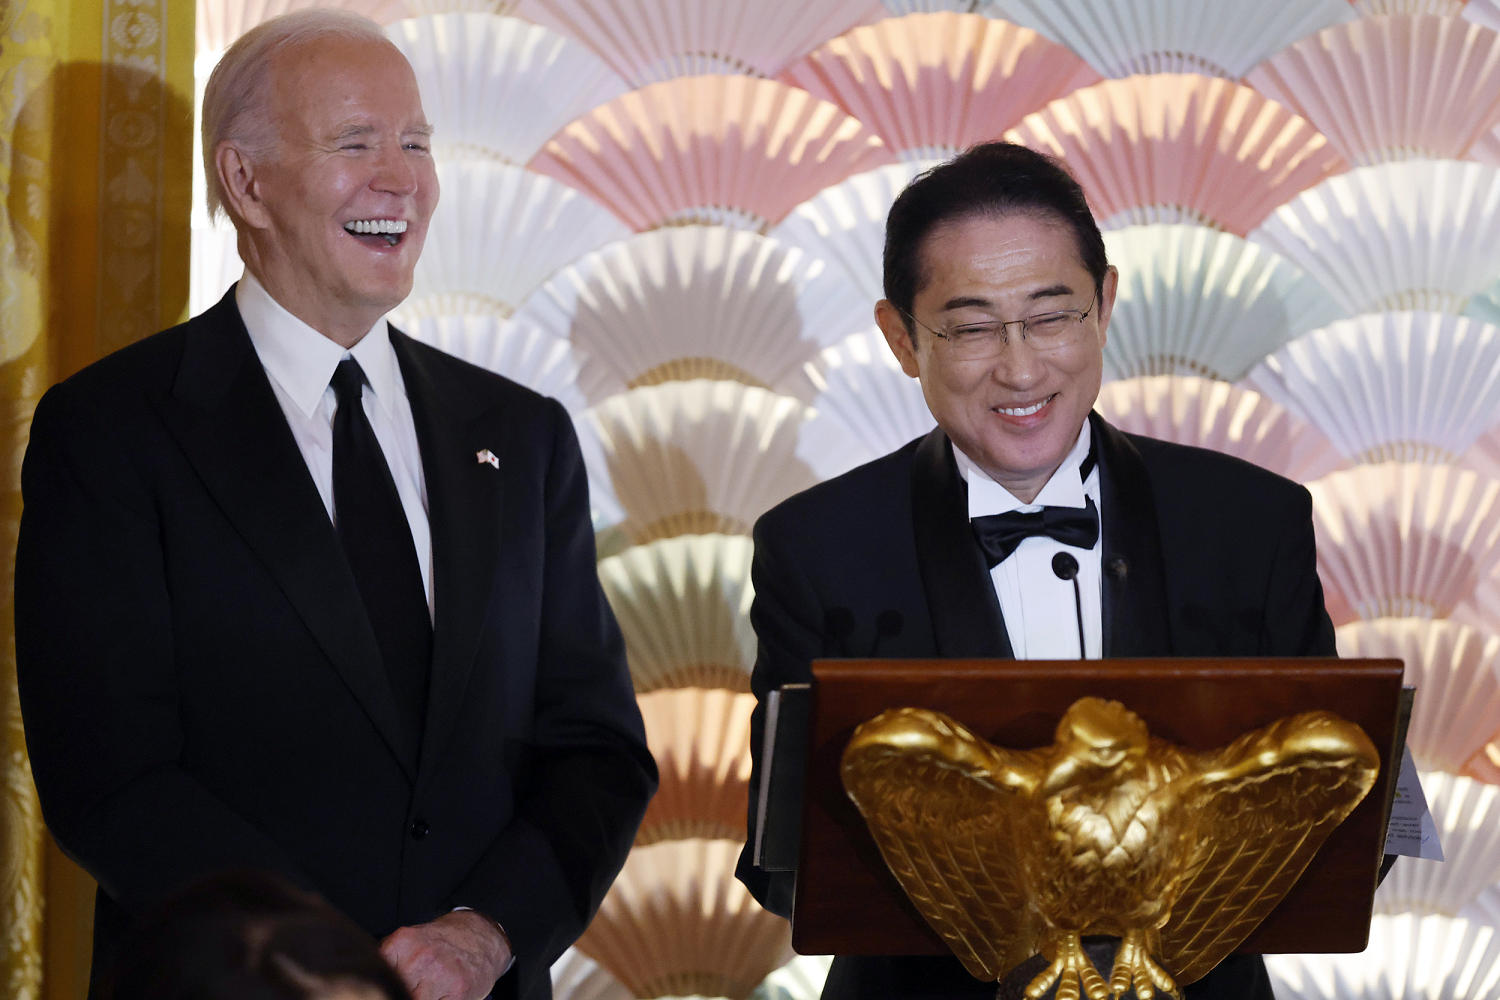 Fumio Kishida cracks jokes and invokes 'Star Trek' as he and Biden toast U.S.-Japan alliance at state dinner